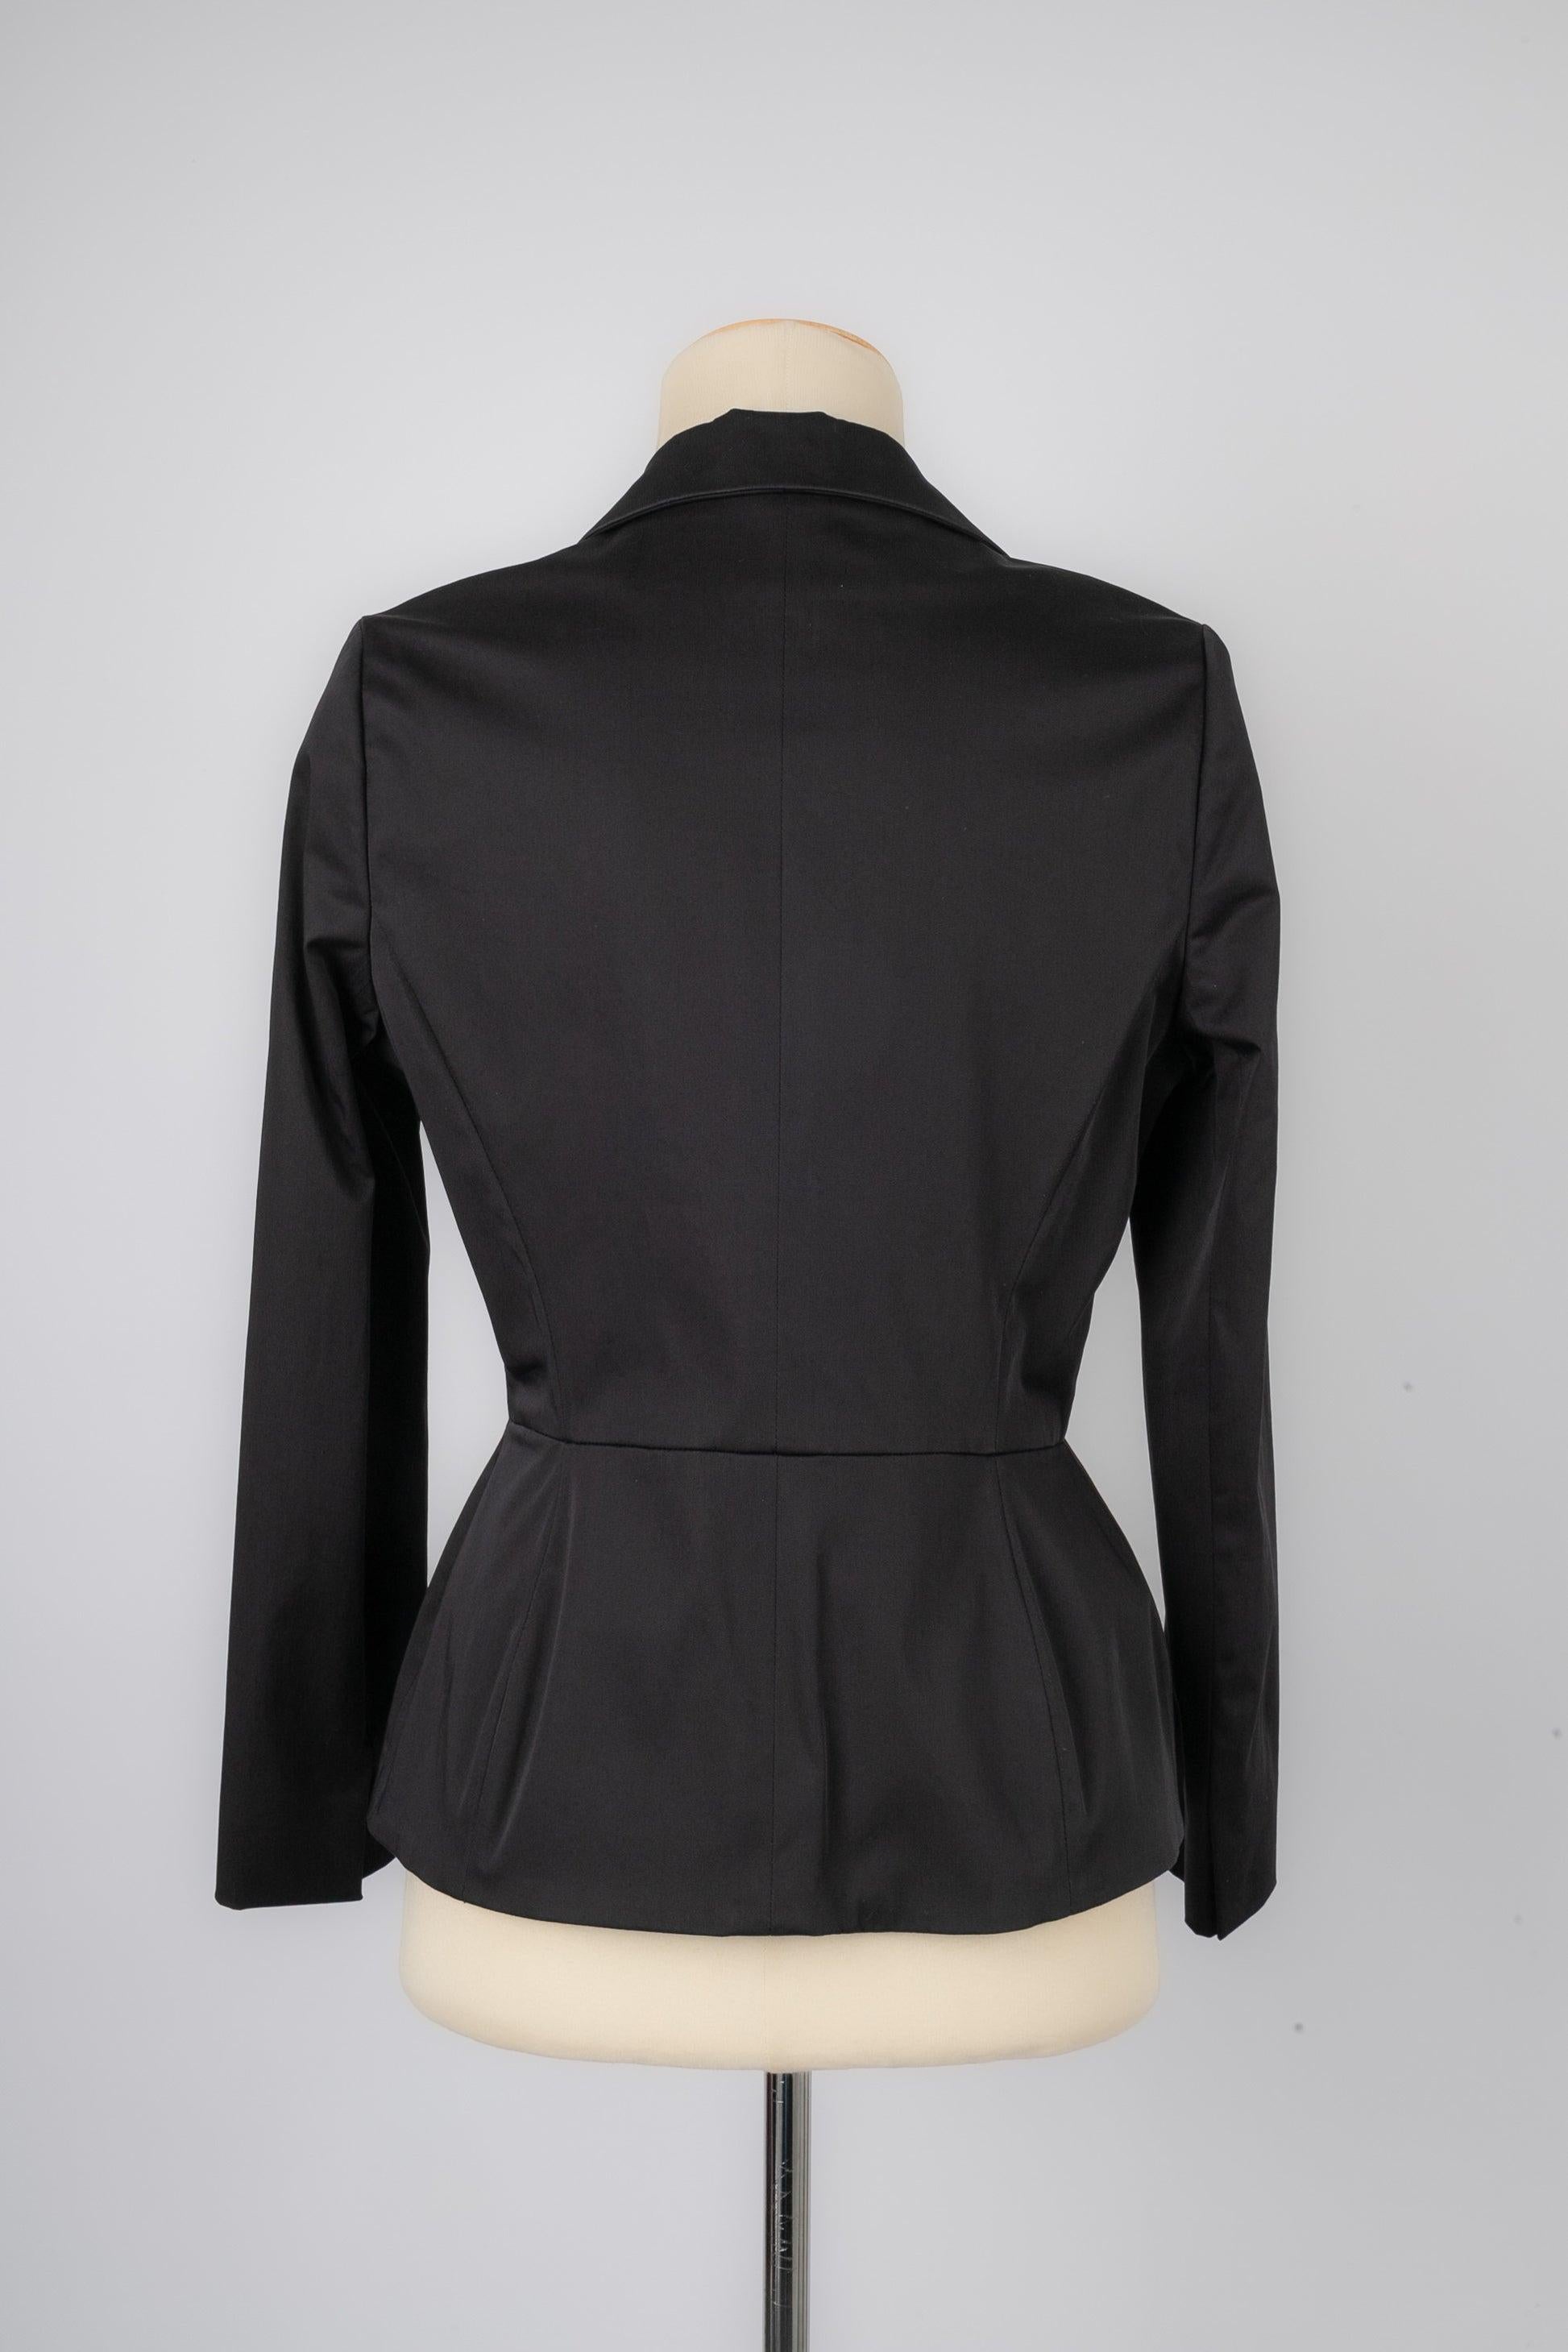 Christian Dior Black Blended Cotton Jacket, circa 2005 In Excellent Condition For Sale In SAINT-OUEN-SUR-SEINE, FR